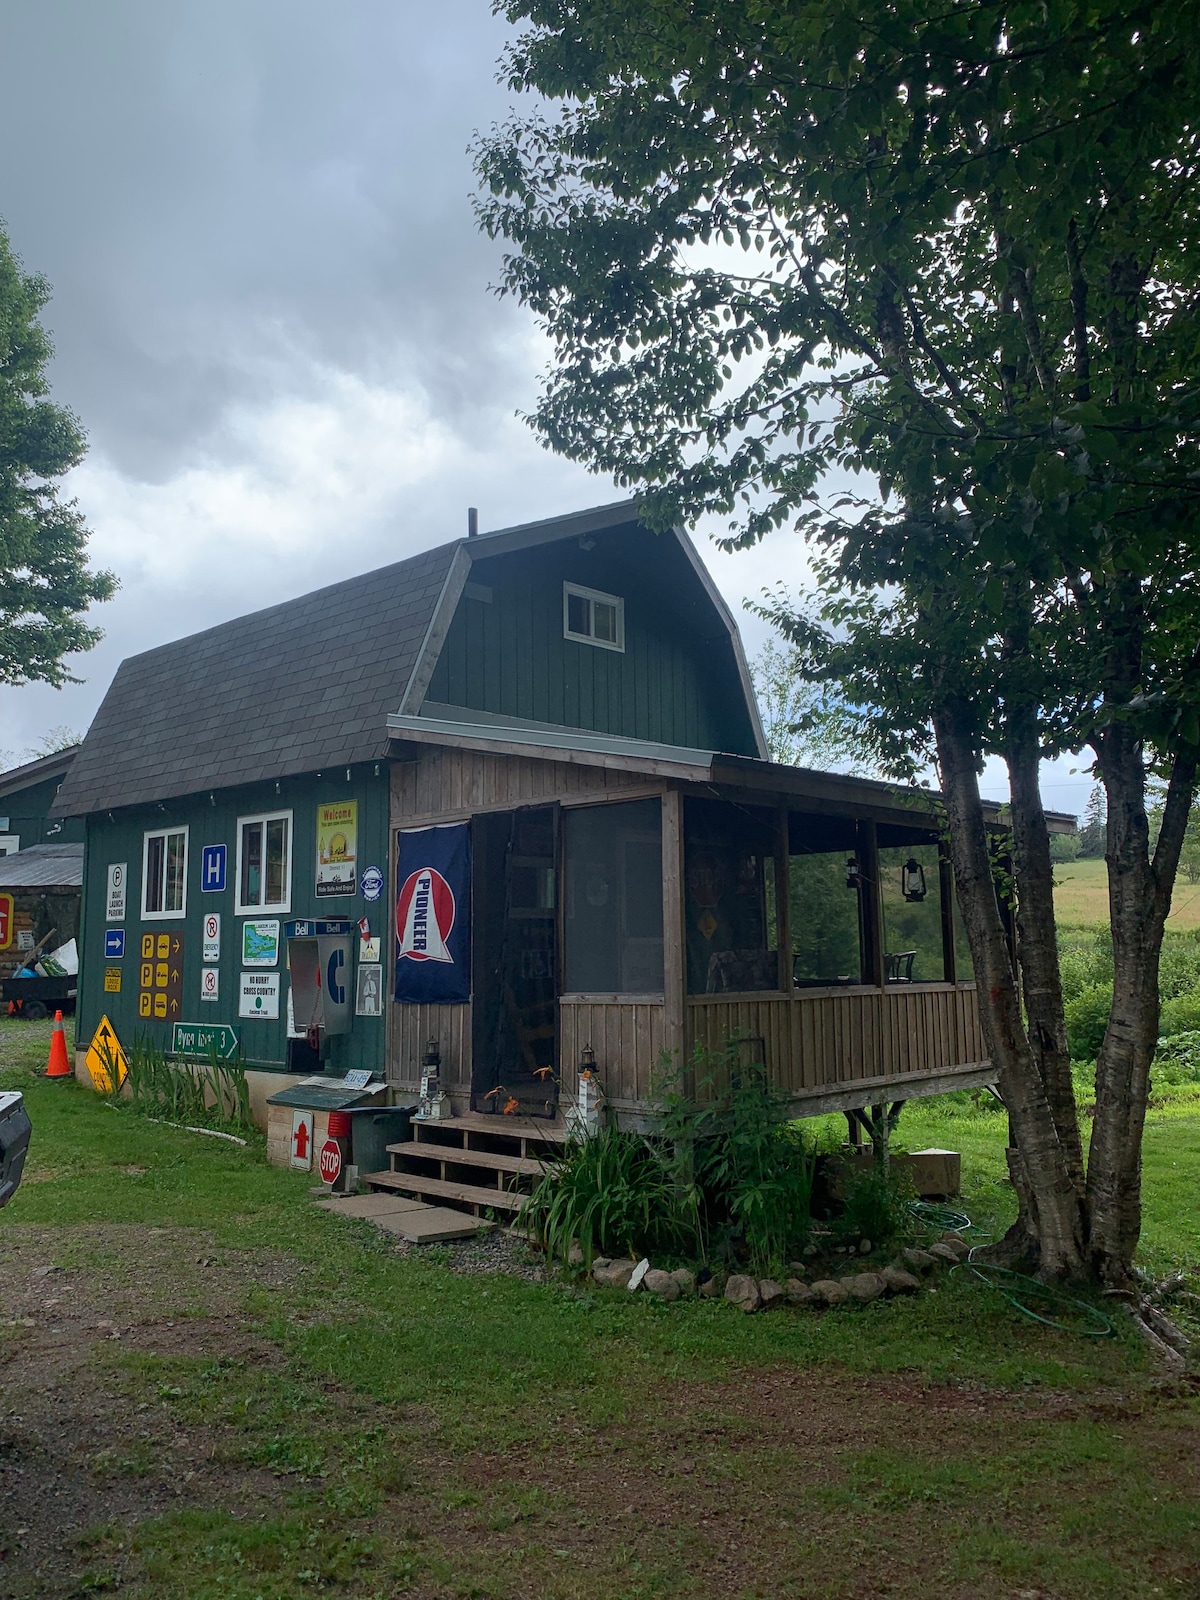 Cottage on hobby farm